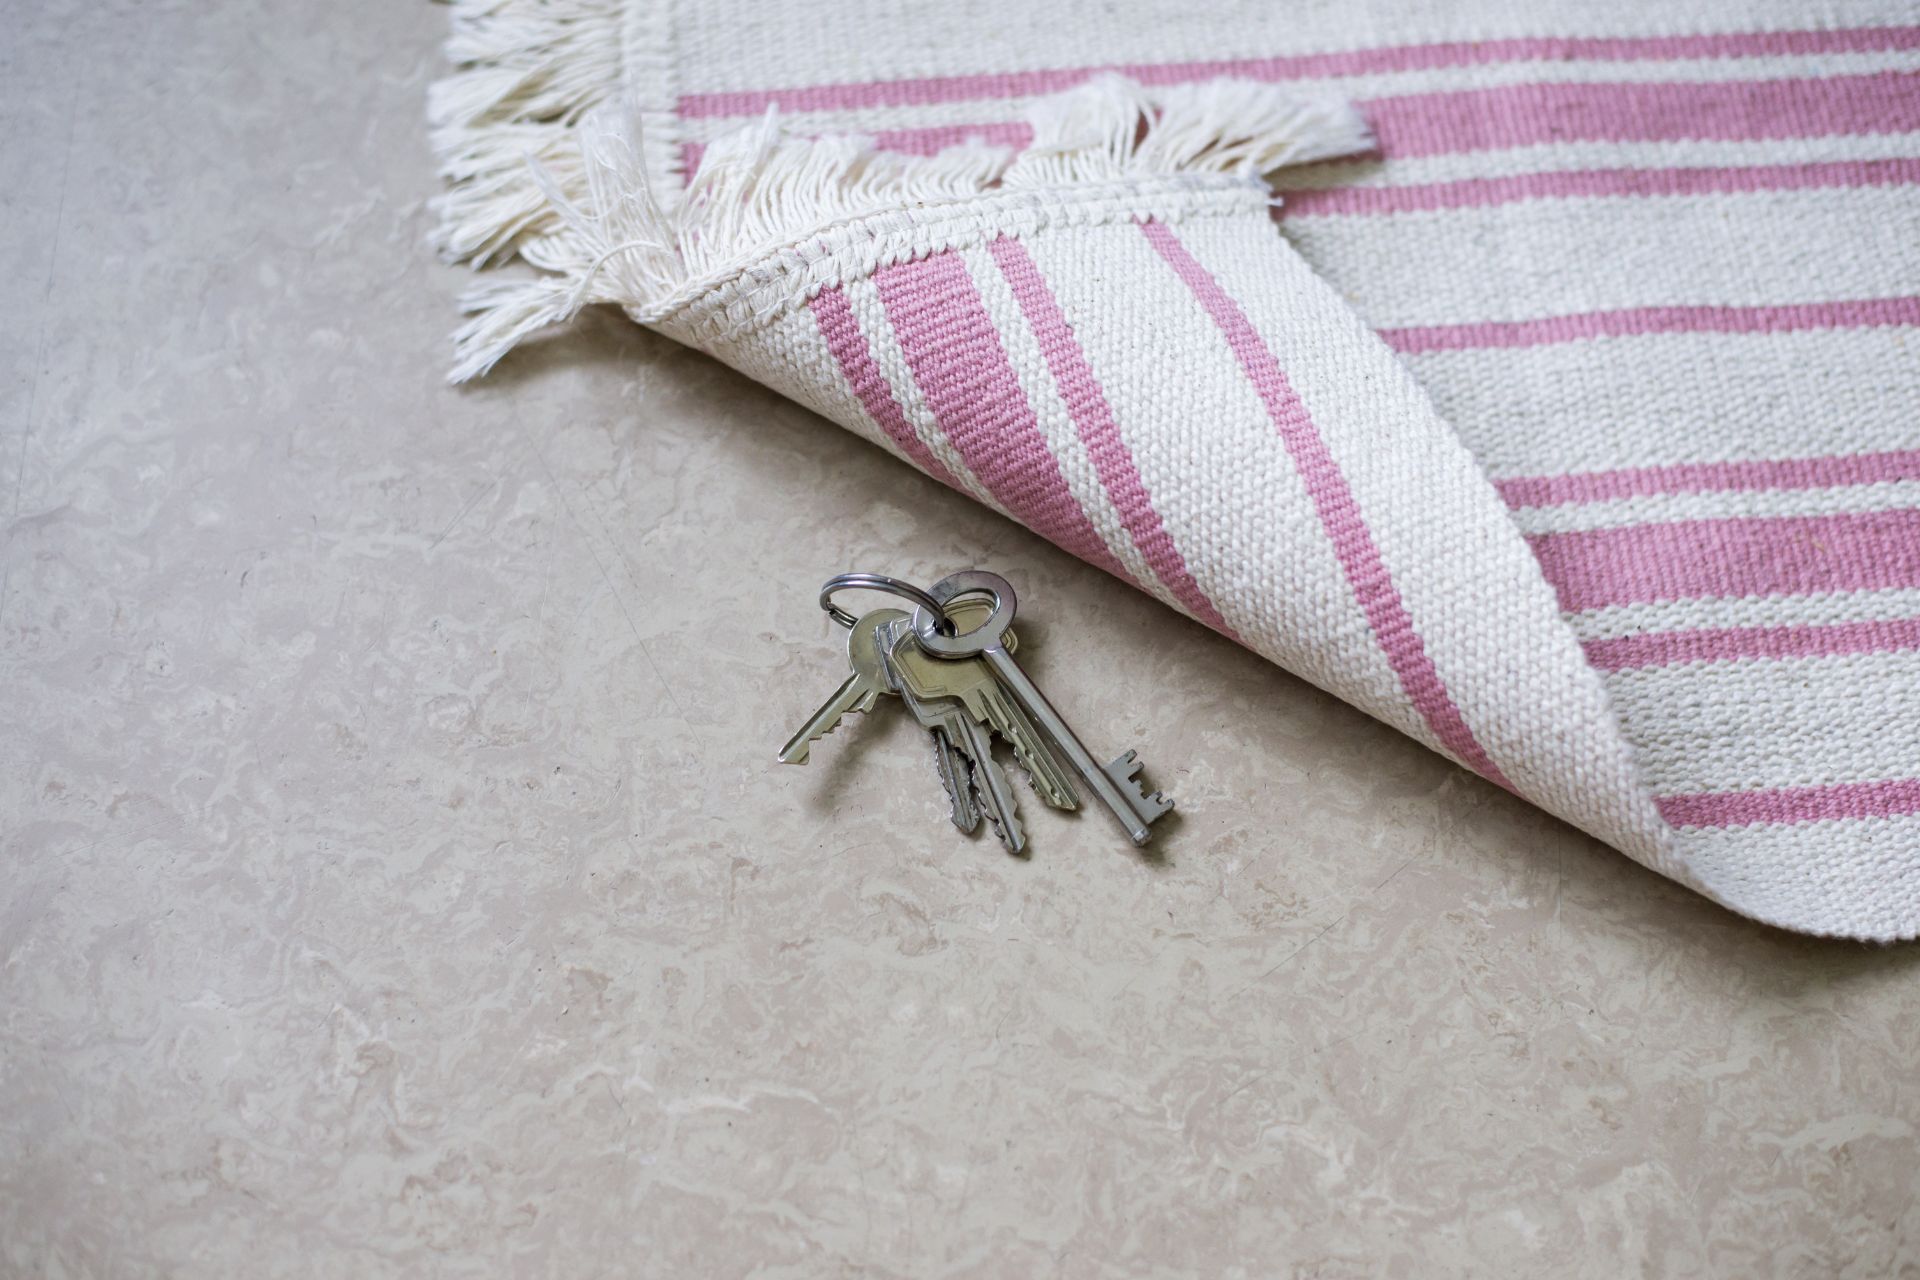 Spare keys under rug